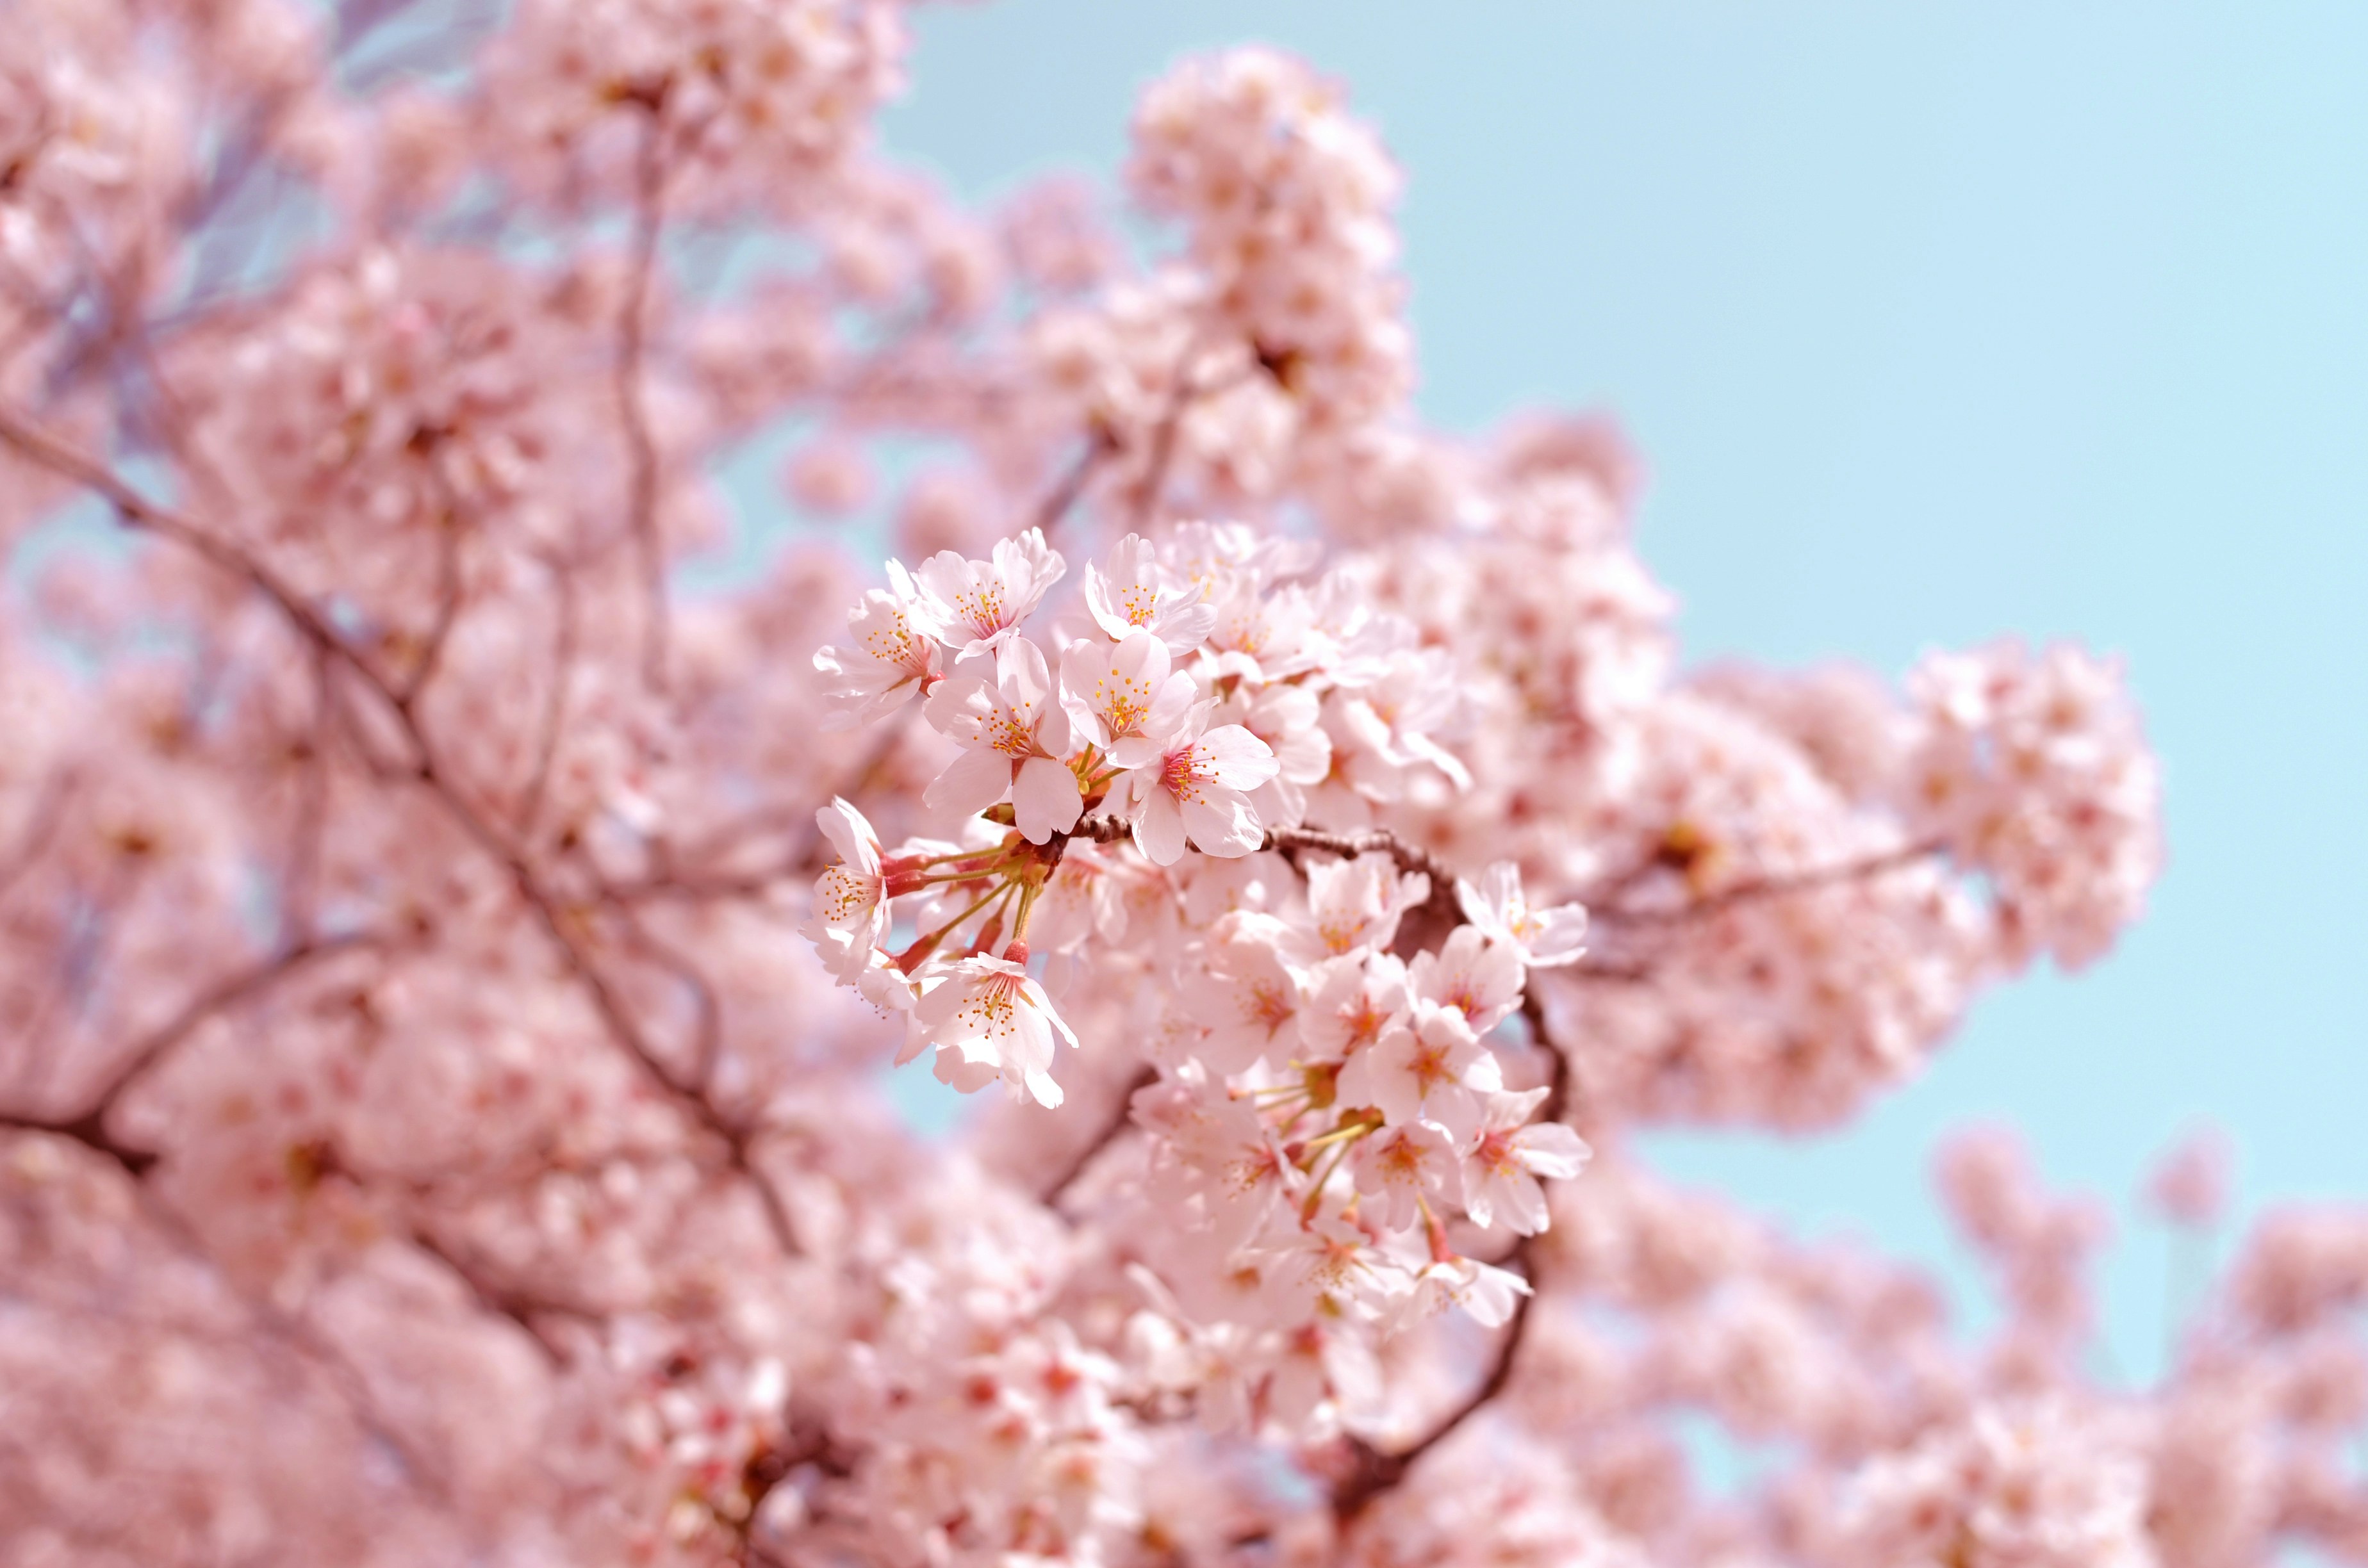 Download 21 cherry-blossom-background-anime Cherry-blossom-1080P,-2K,-4K,-5K-HD-wallpapers-free--.jpg